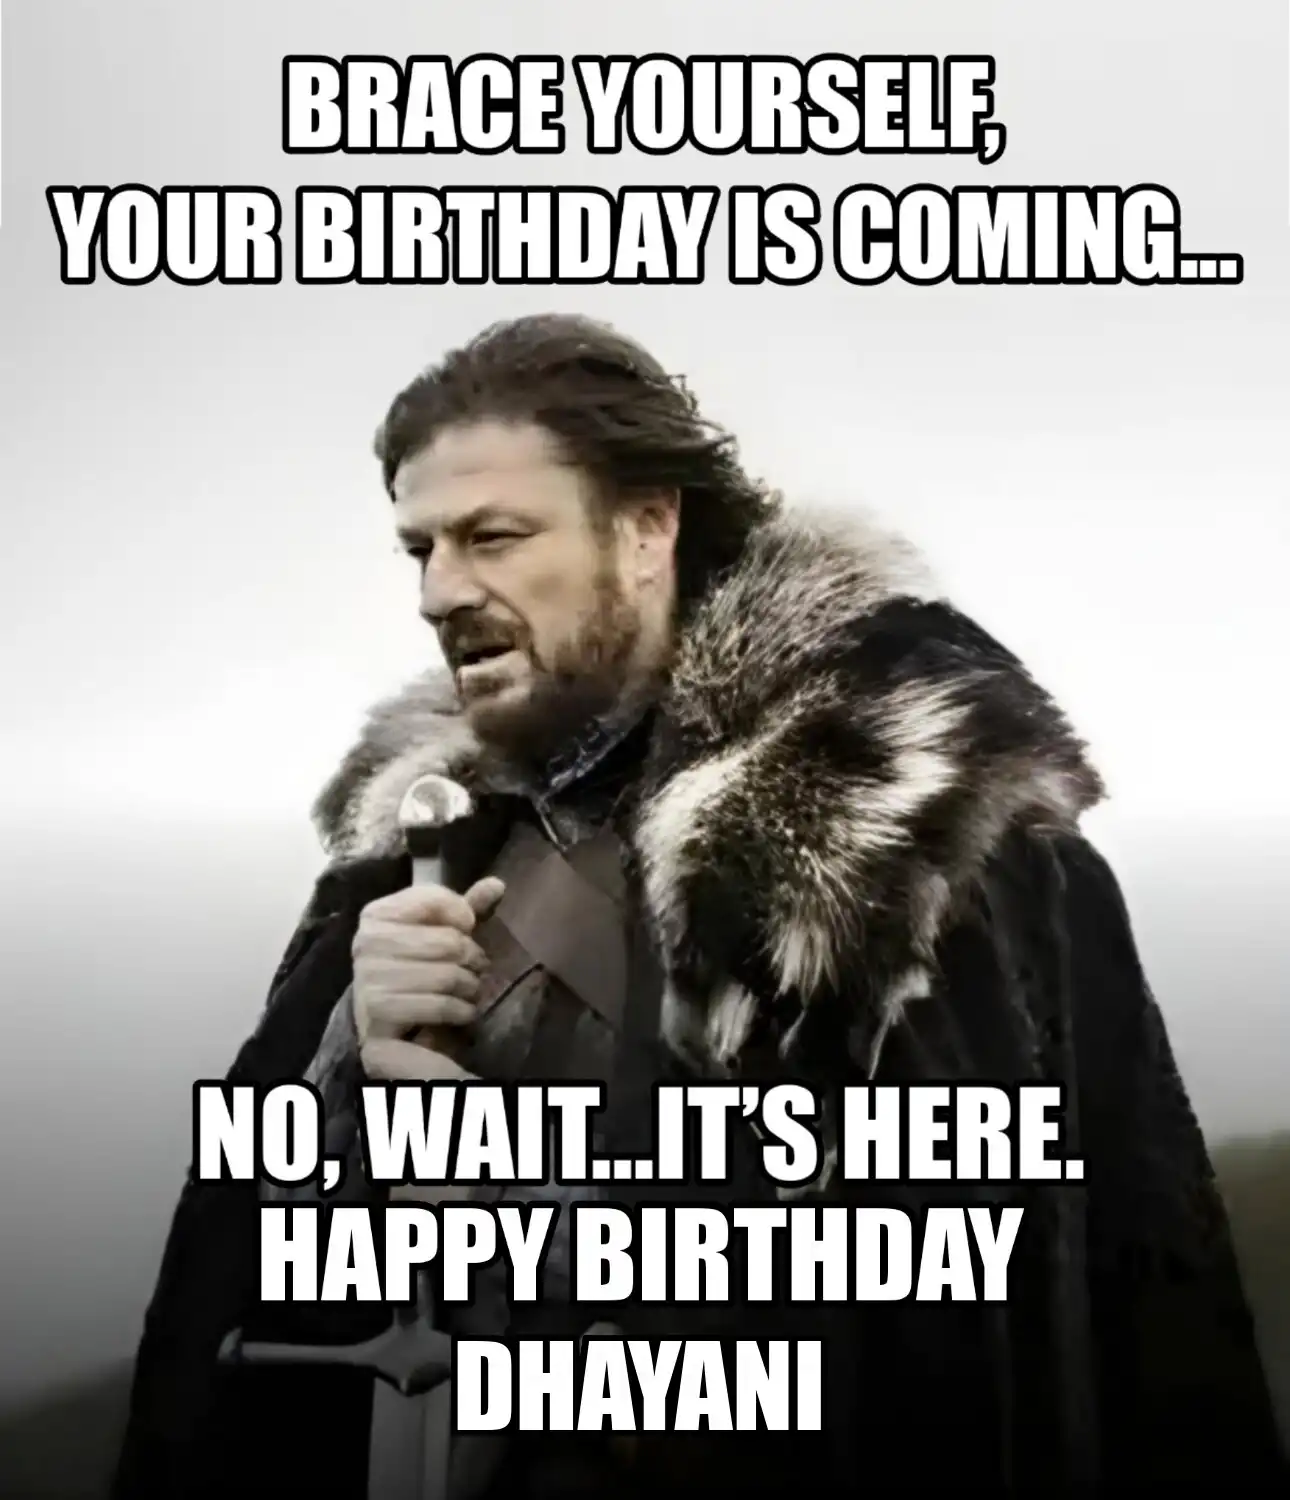 Happy Birthday Dhayani Brace Yourself Your Birthday Is Coming Meme